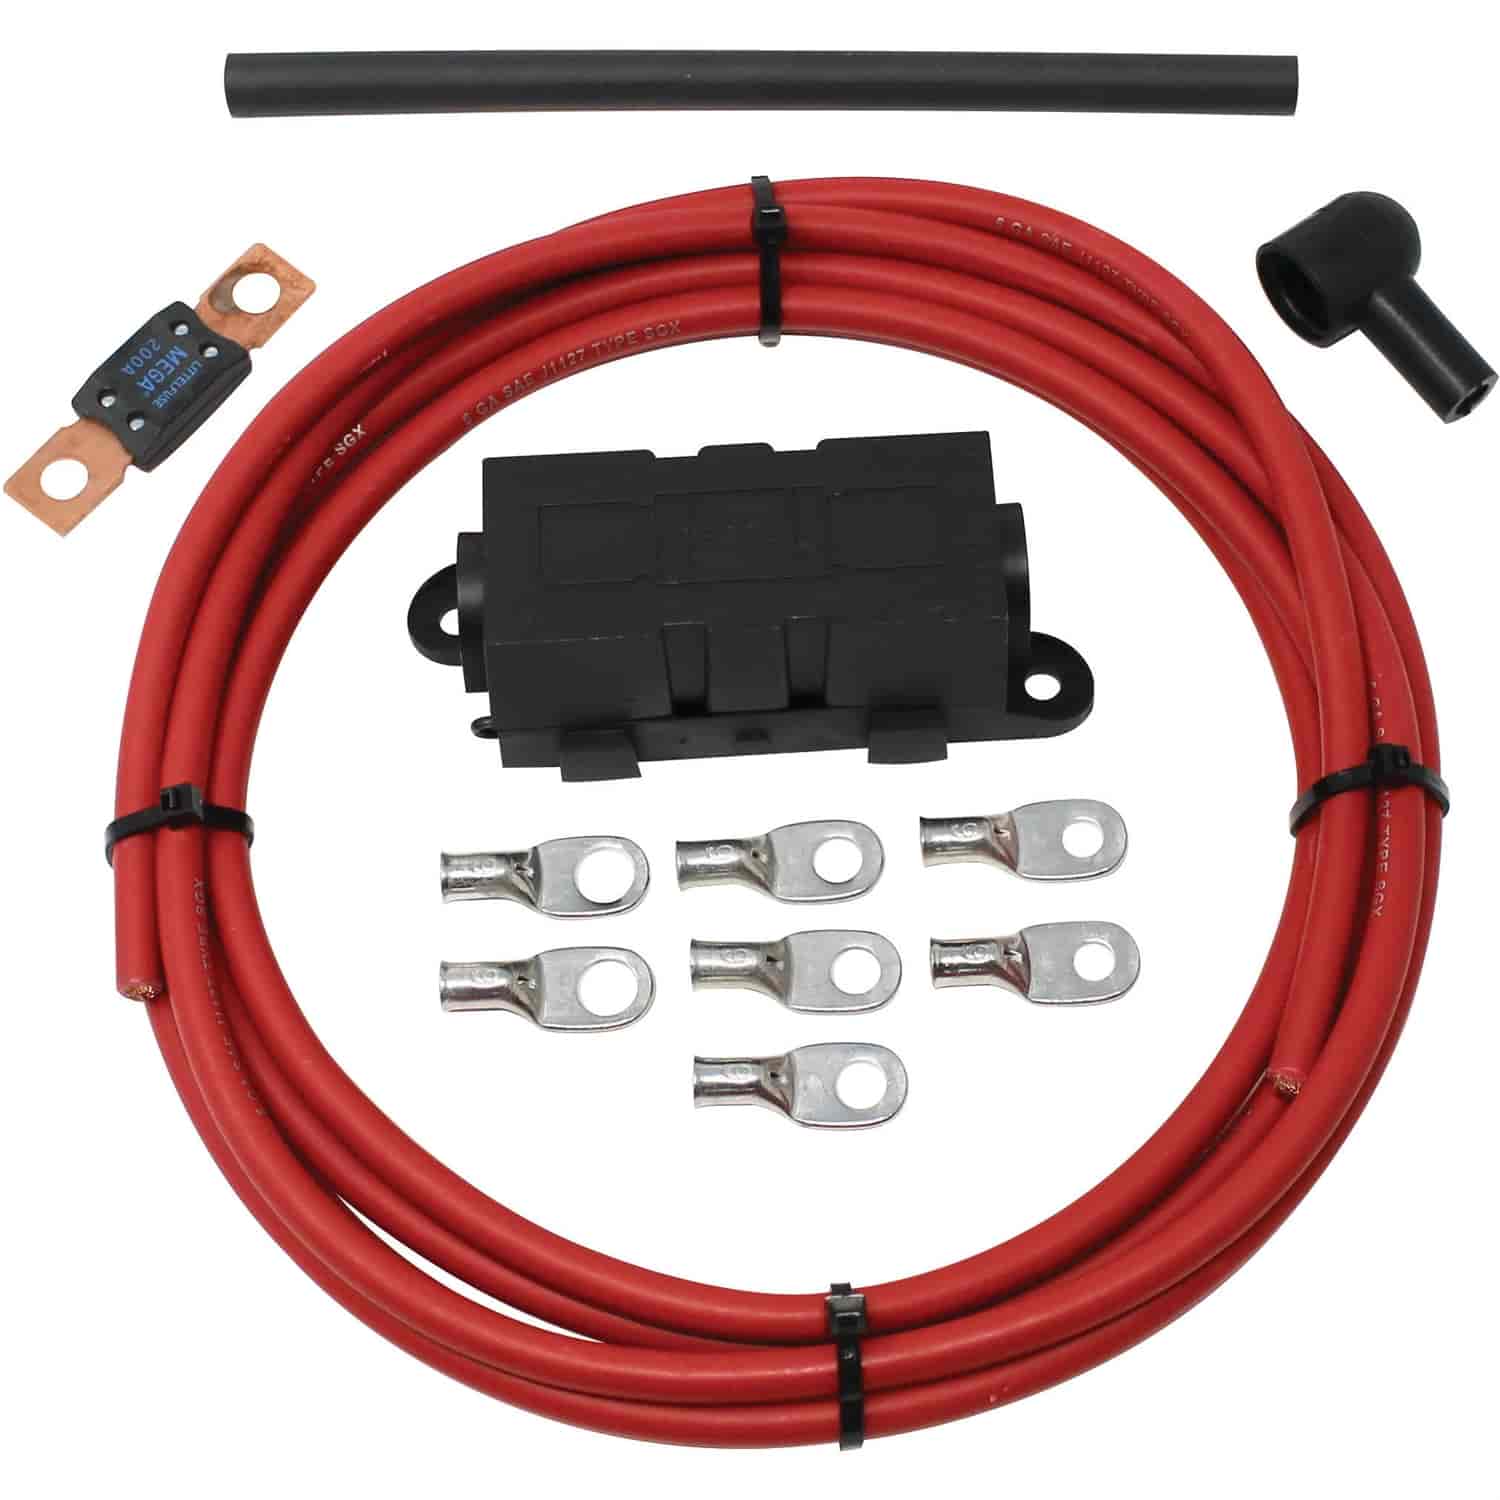 Alternator Connection Kit 6 Gauge Wire